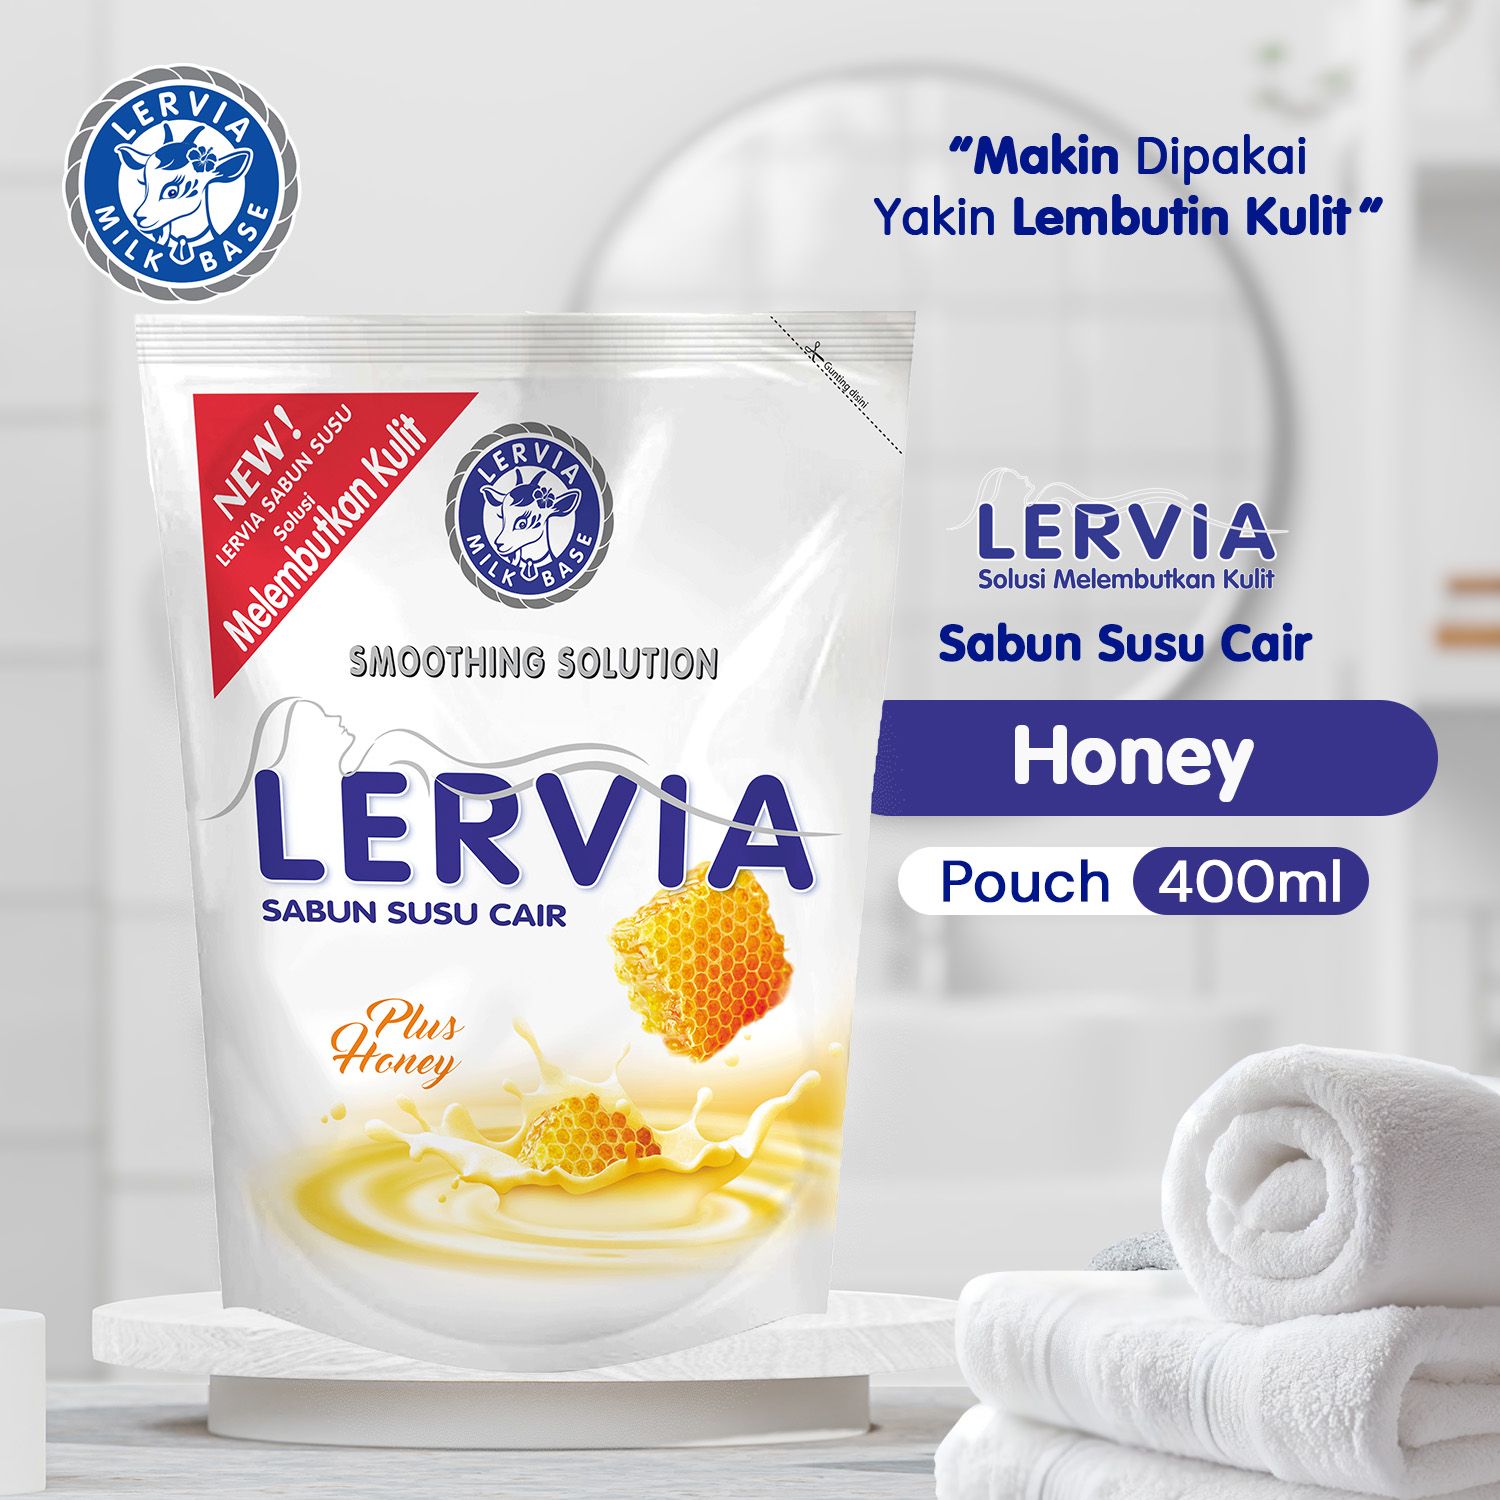 LERVIA Sabun Susu Cair Plus Honey 400mL - 1